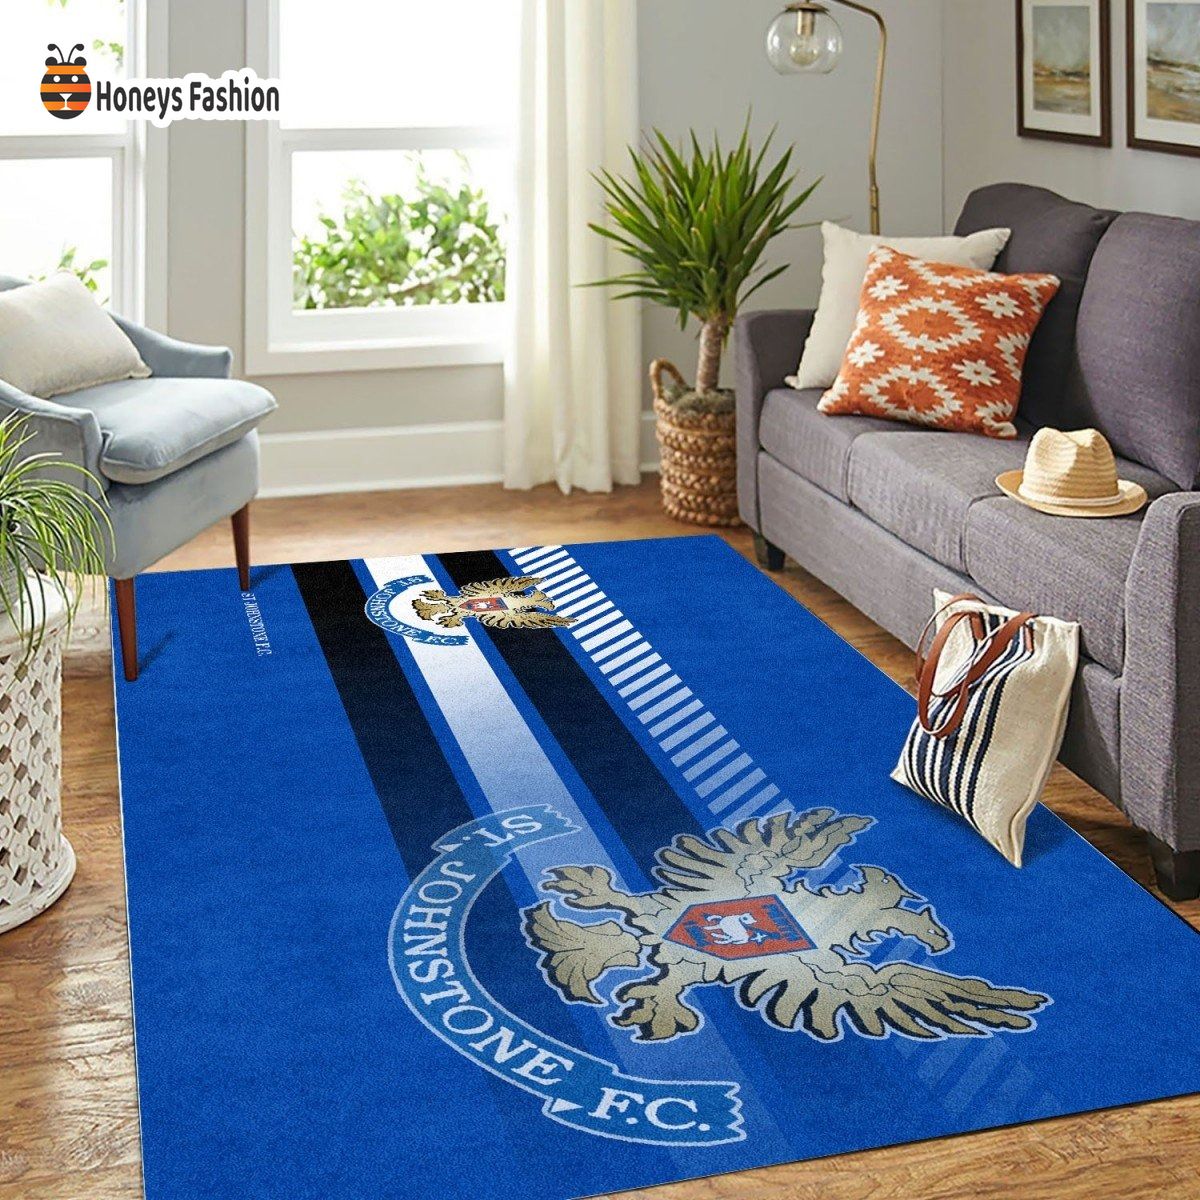 St Johnstone F.C Rug Carpet